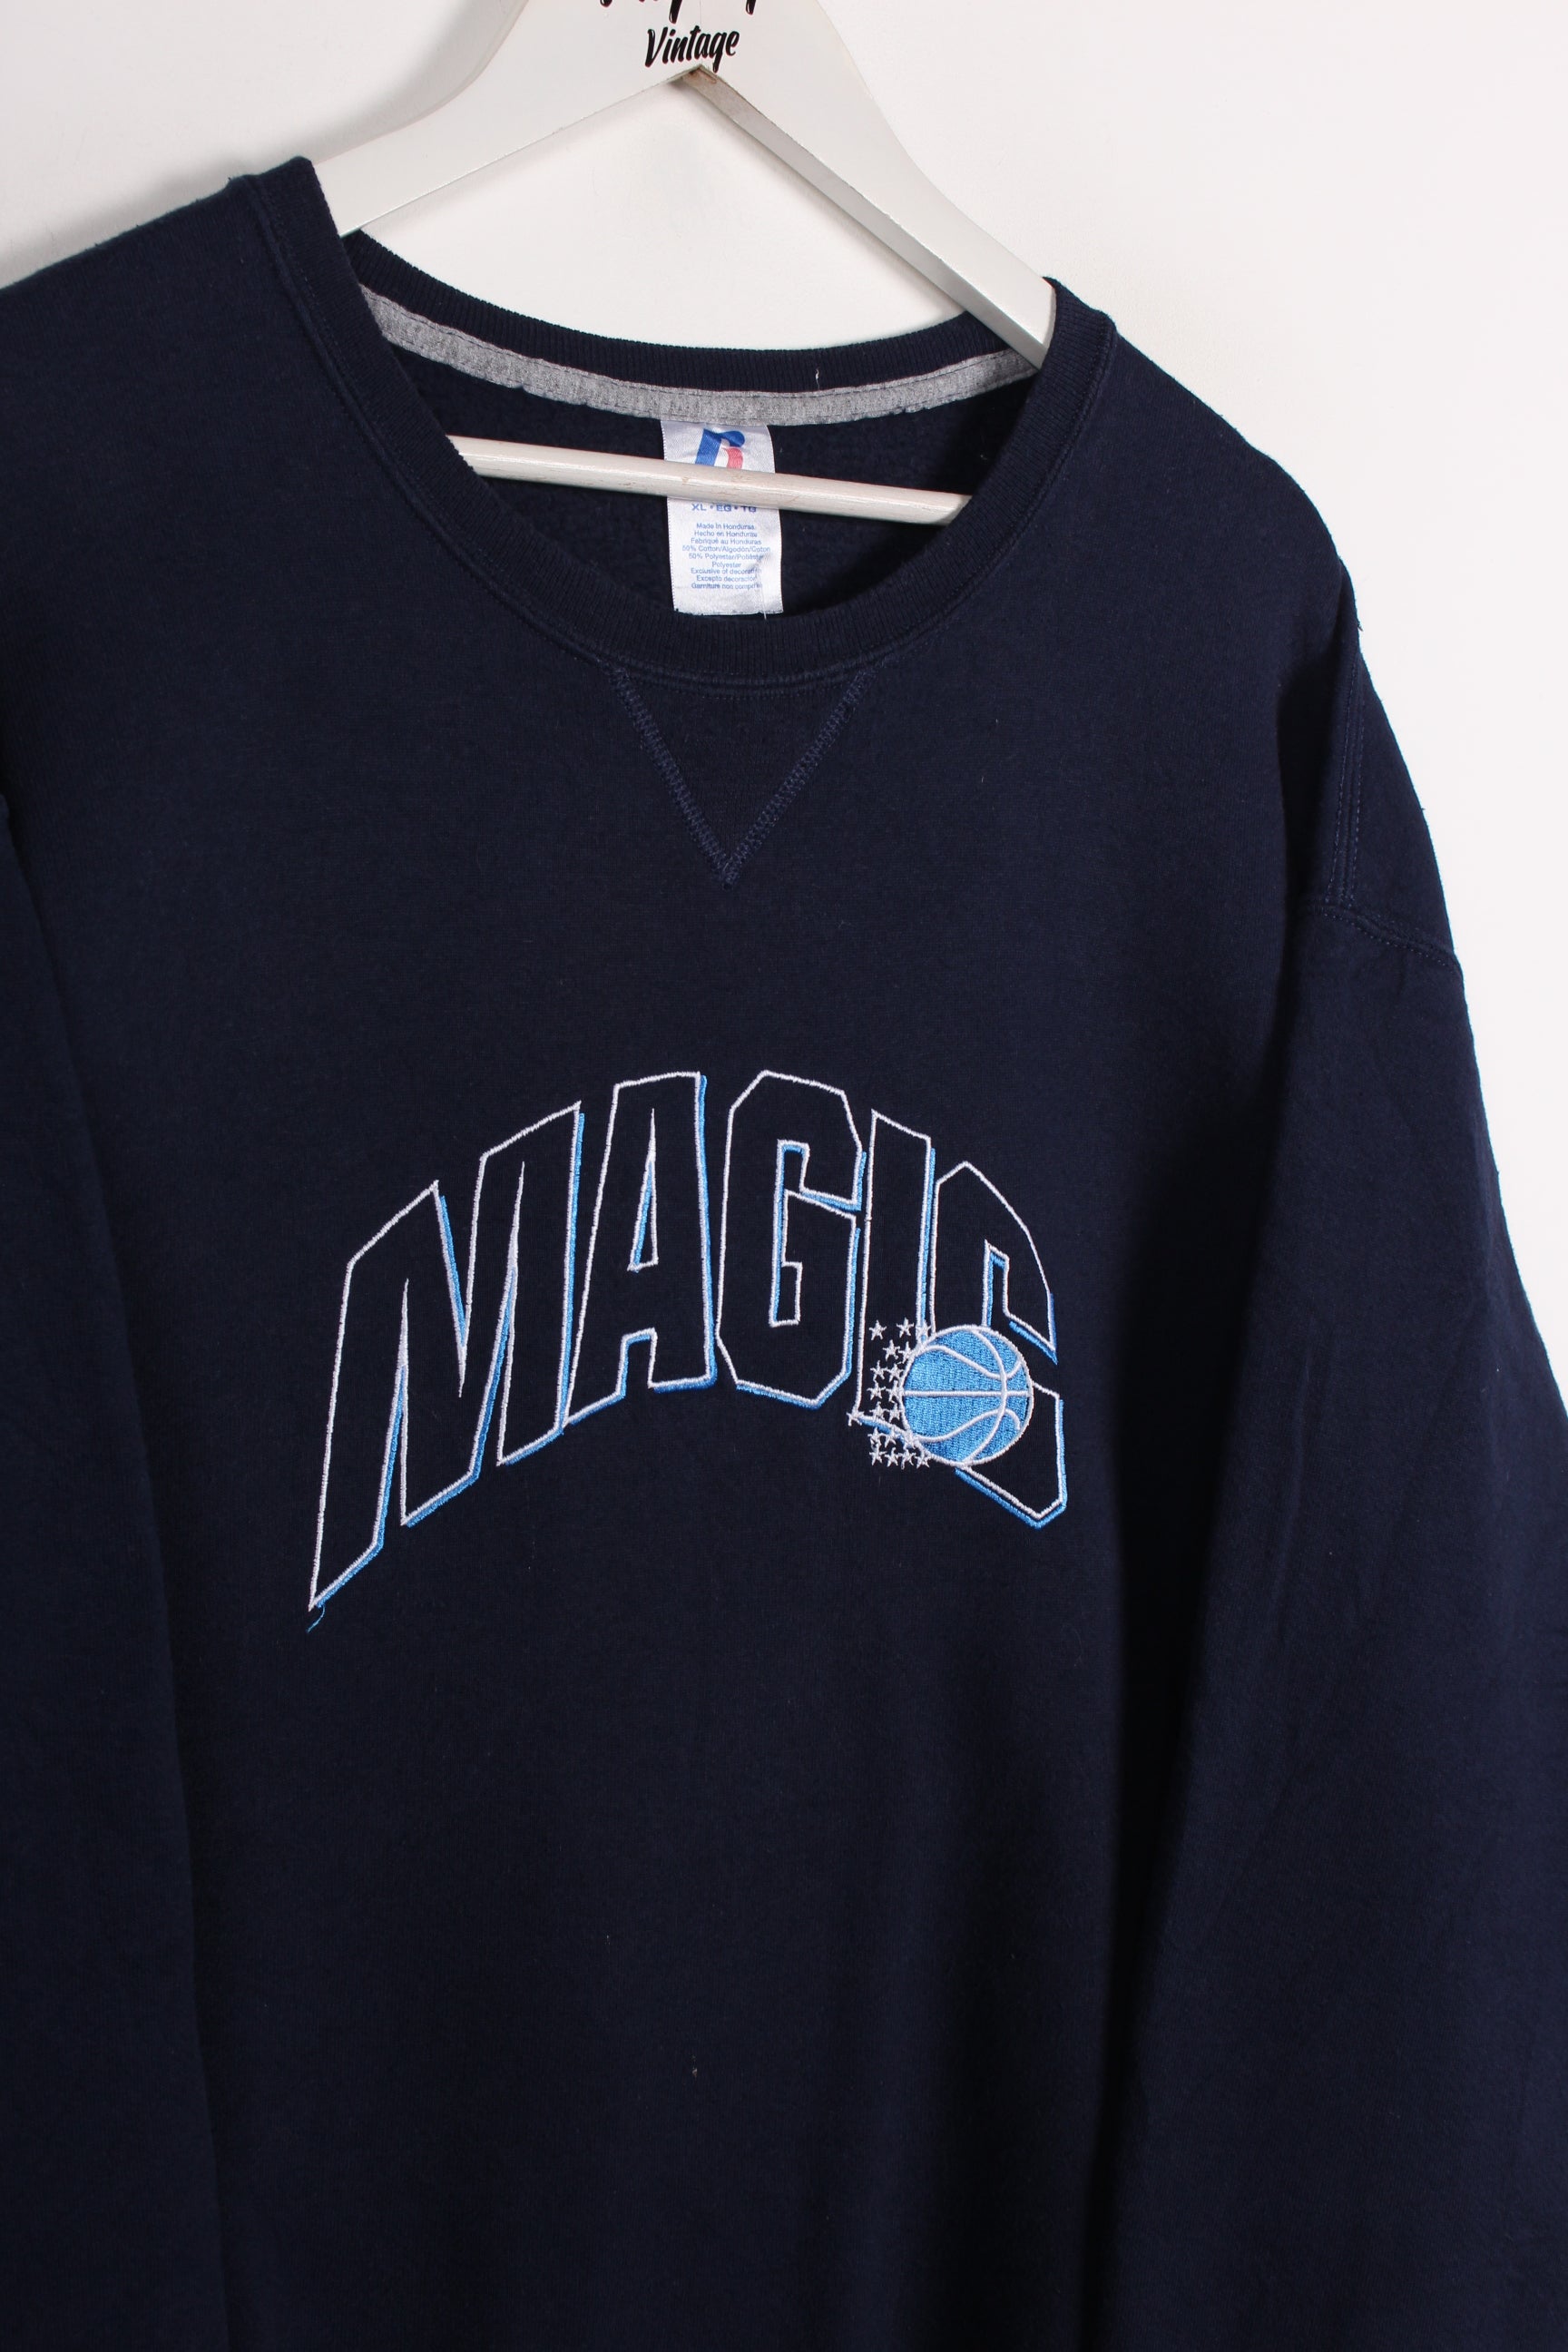 Orlando Magic Sweatshirt